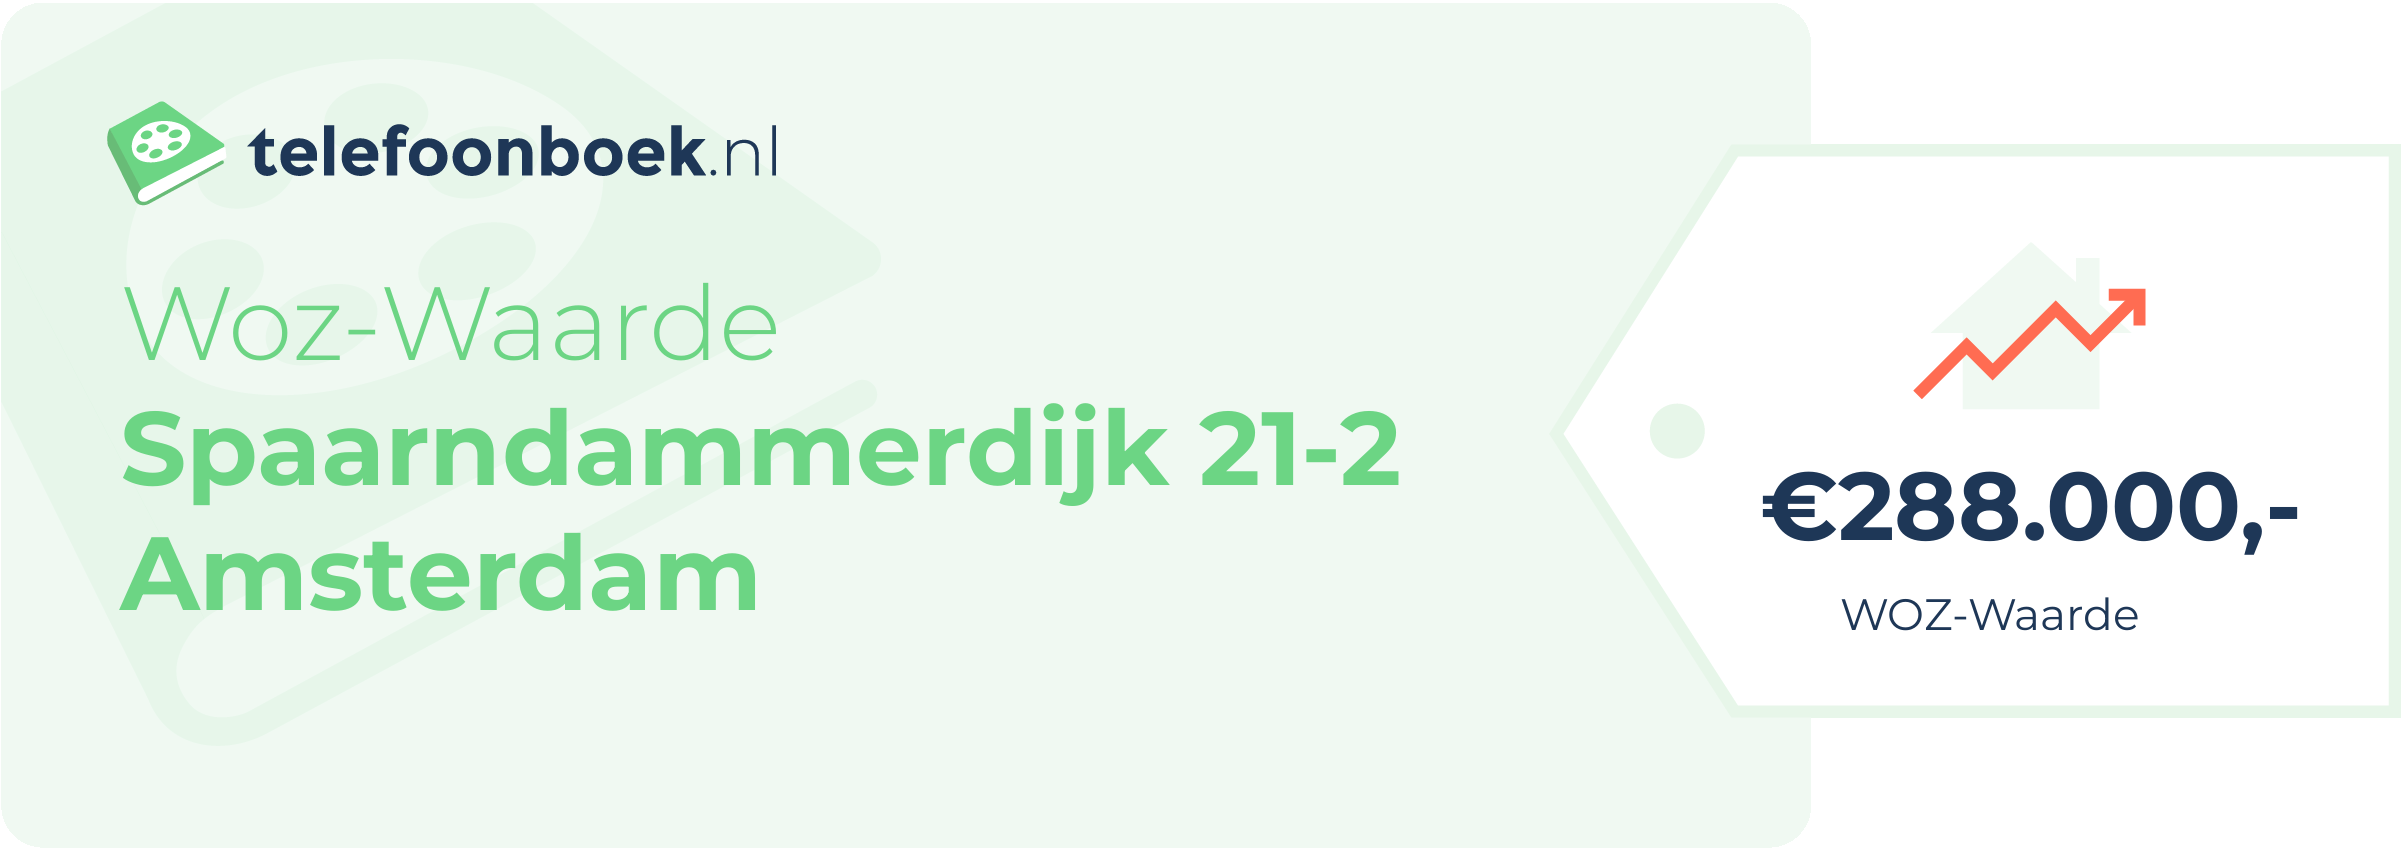 WOZ-waarde Spaarndammerdijk 21-2 Amsterdam